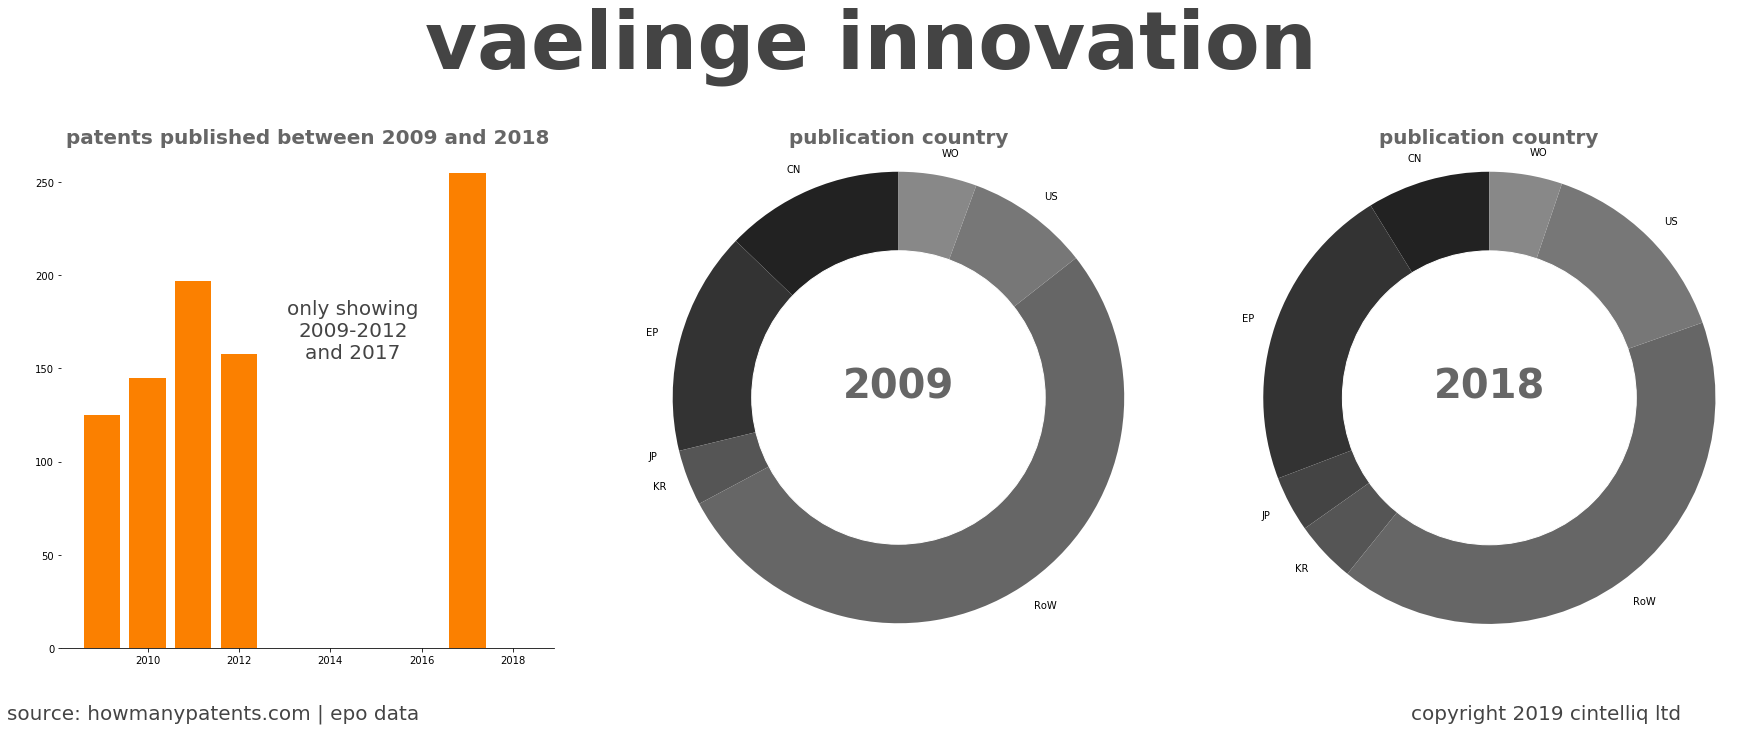 summary of patents for Vaelinge Innovation